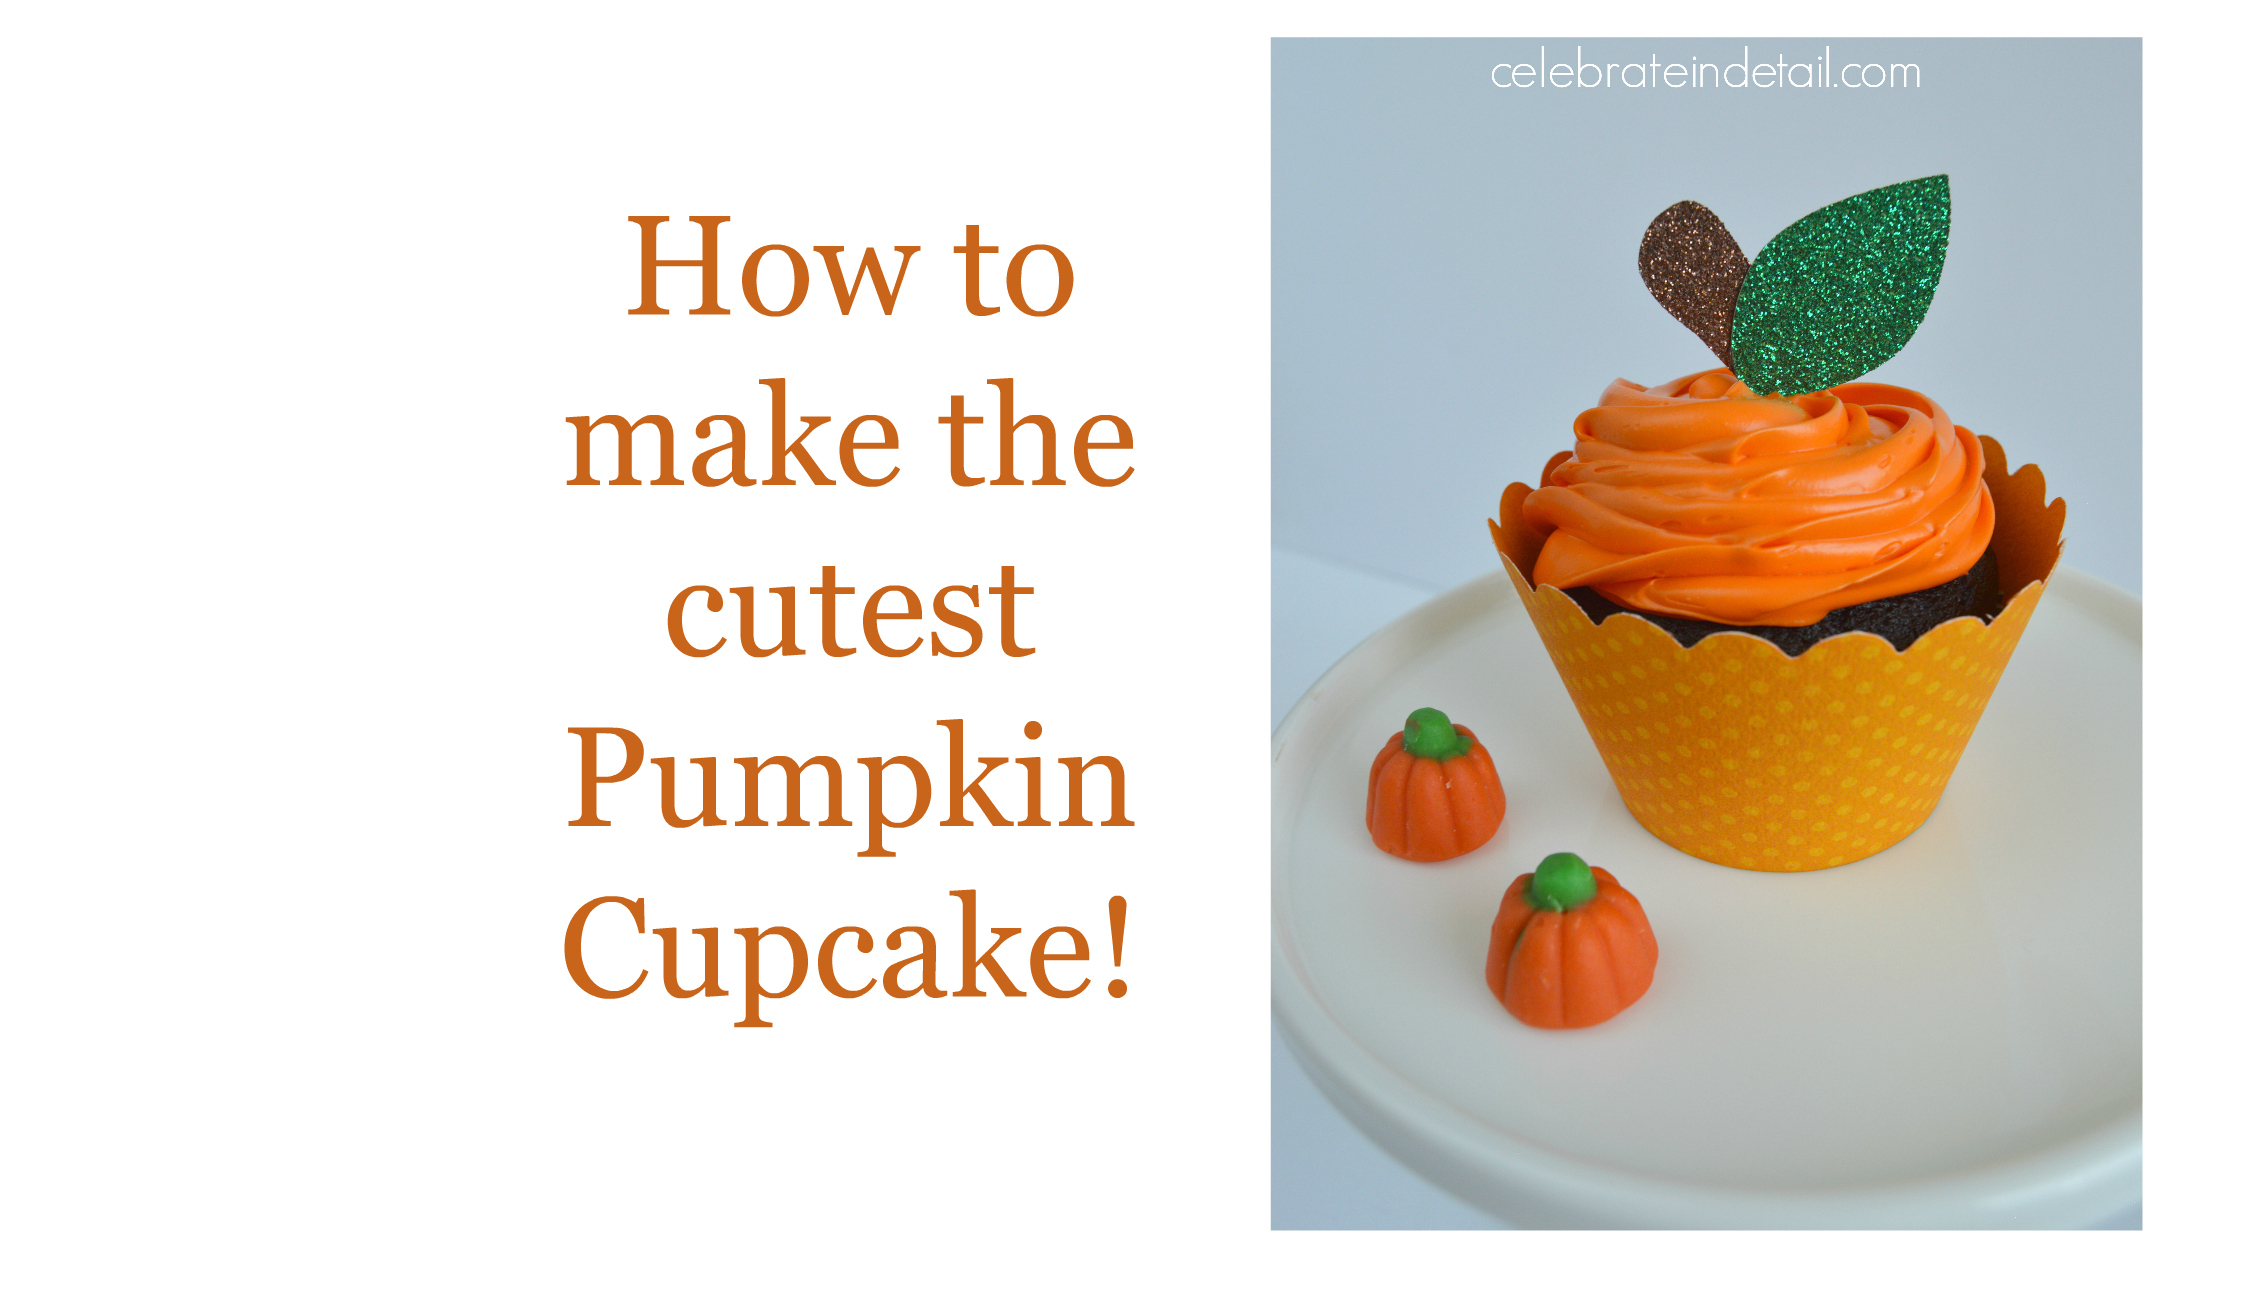 pumpkin-cupcake celebrateindetail.com Easy and creative cupcake